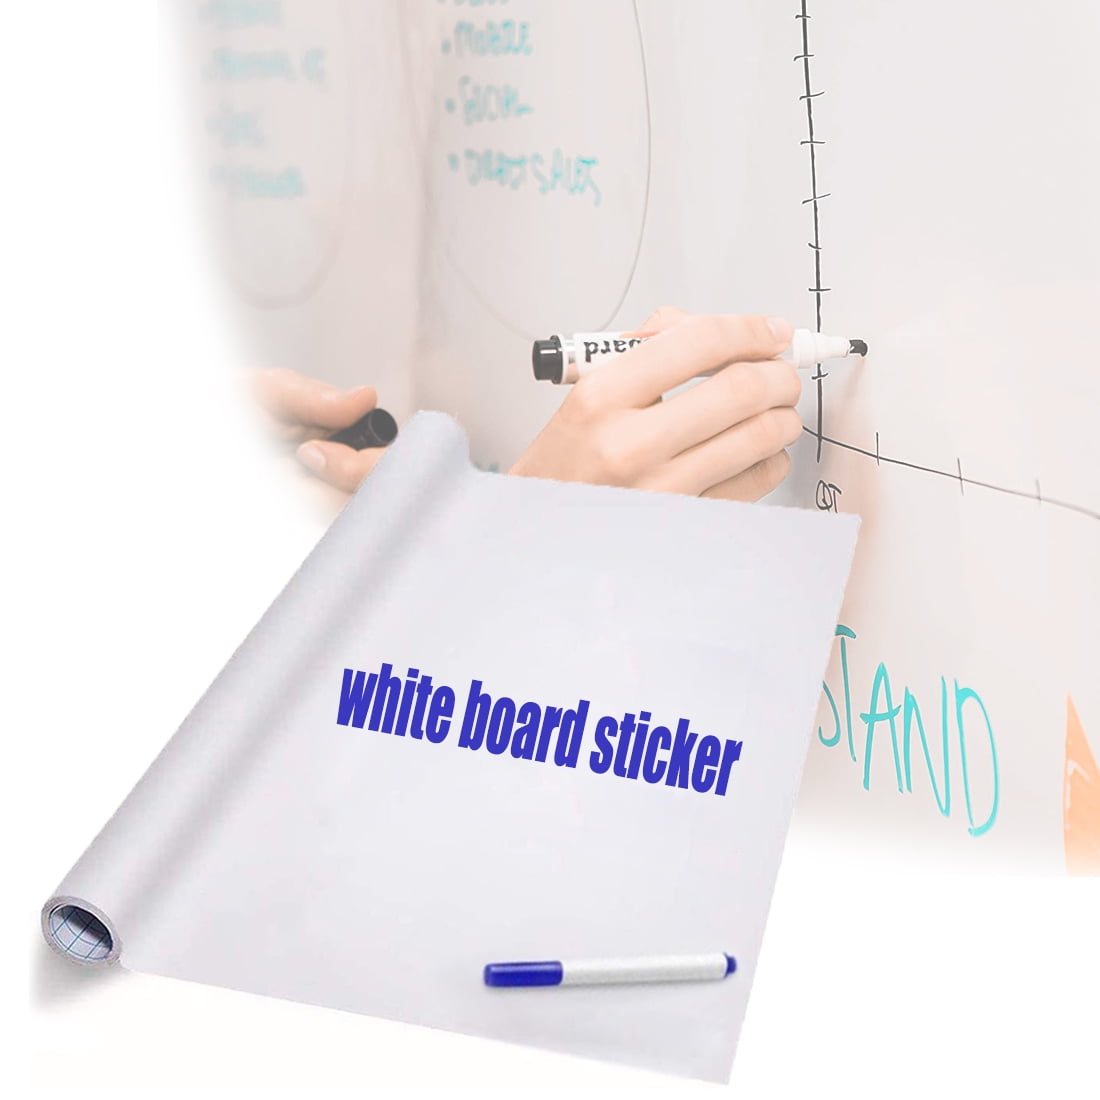 Dry erase whiteboard sticker,Chalkboard & dry erase vinyl